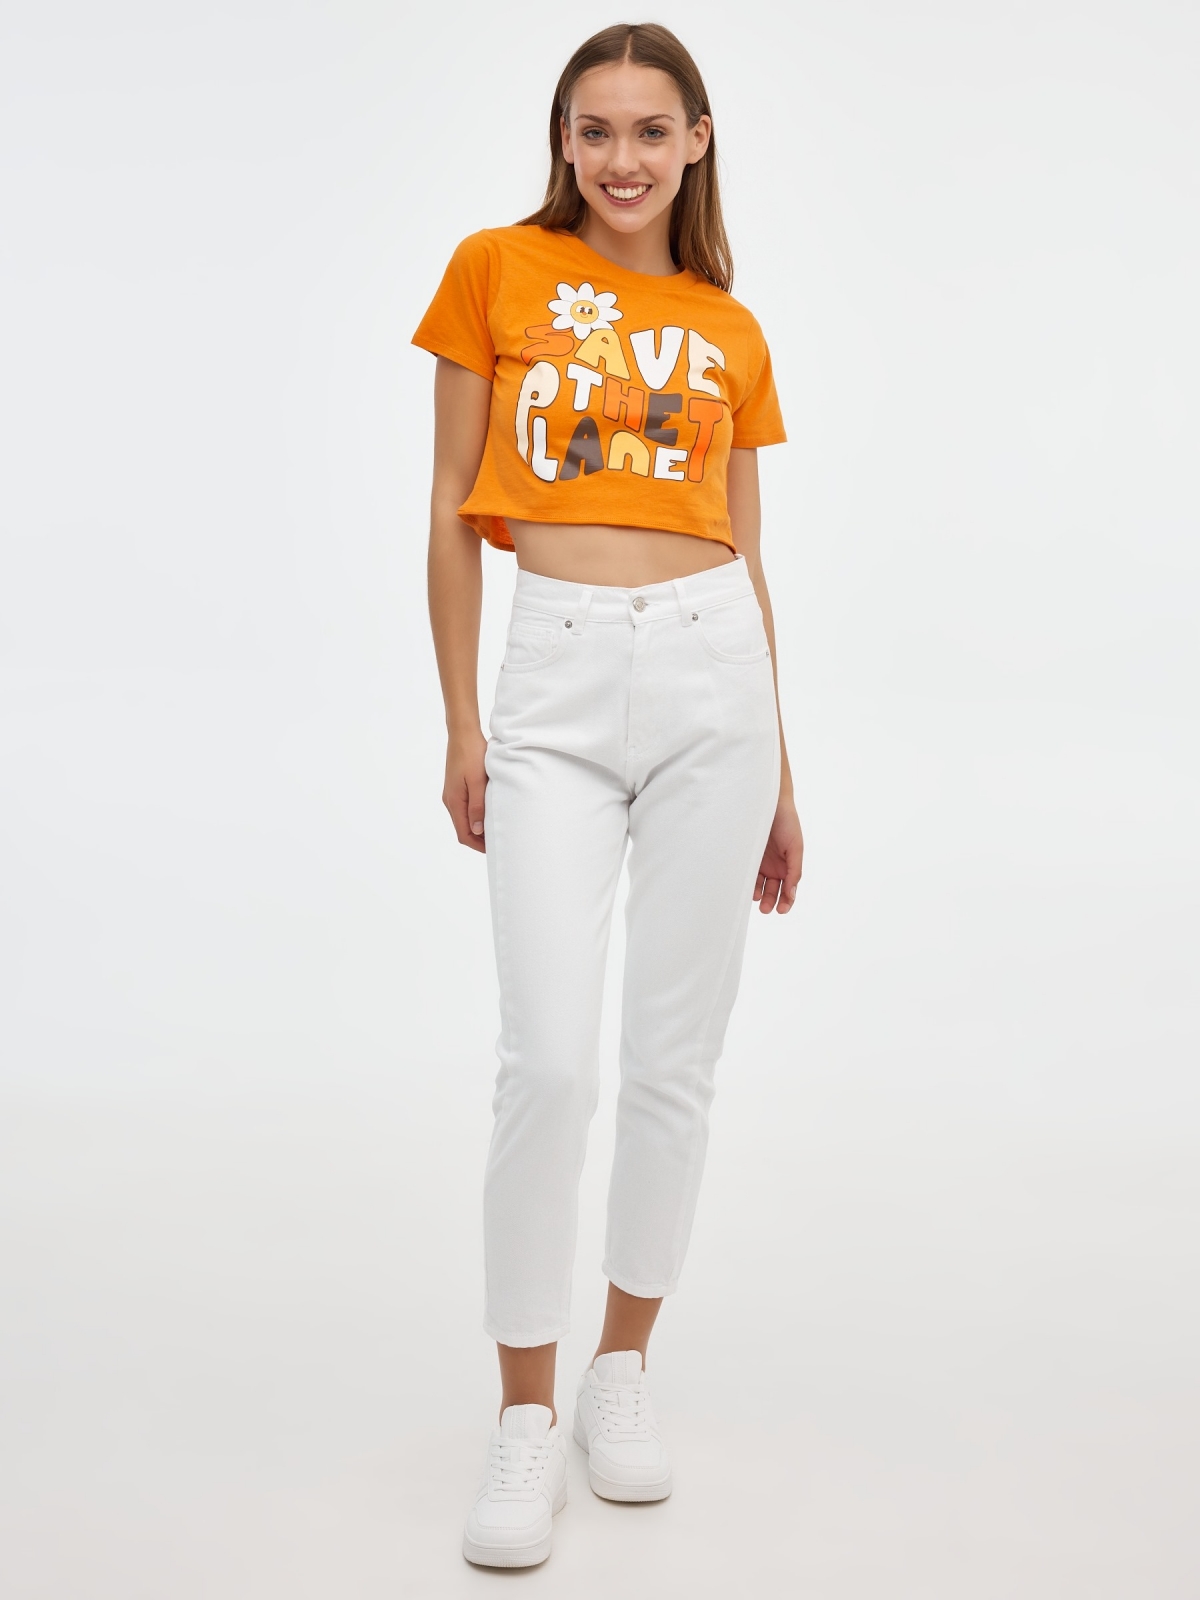 T-shirt Save the Planet laranja vista geral frontal